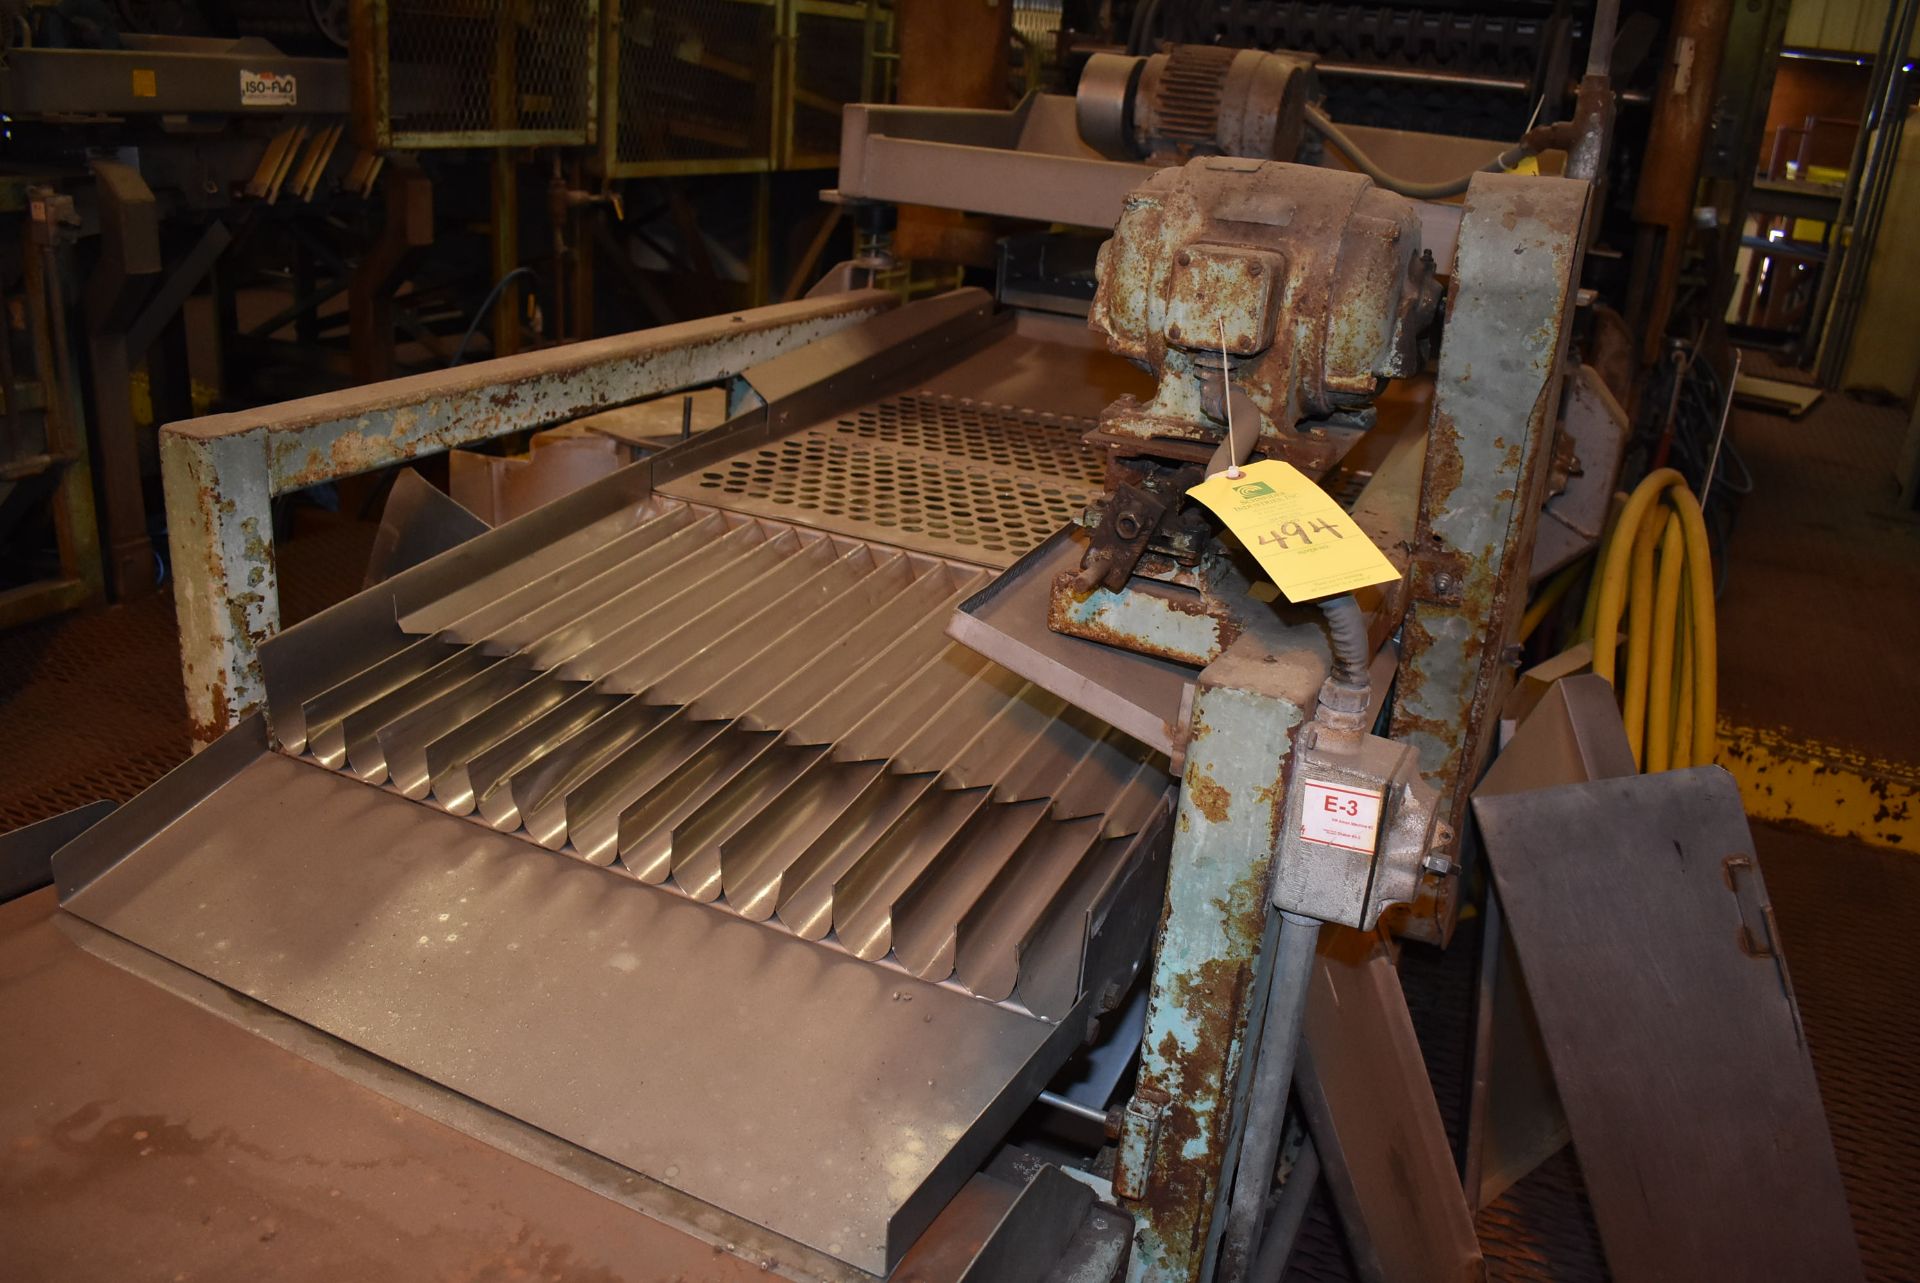 Commercial Vibratory Conveyor, 36" x 72" Length, RIGGING FEE: $250